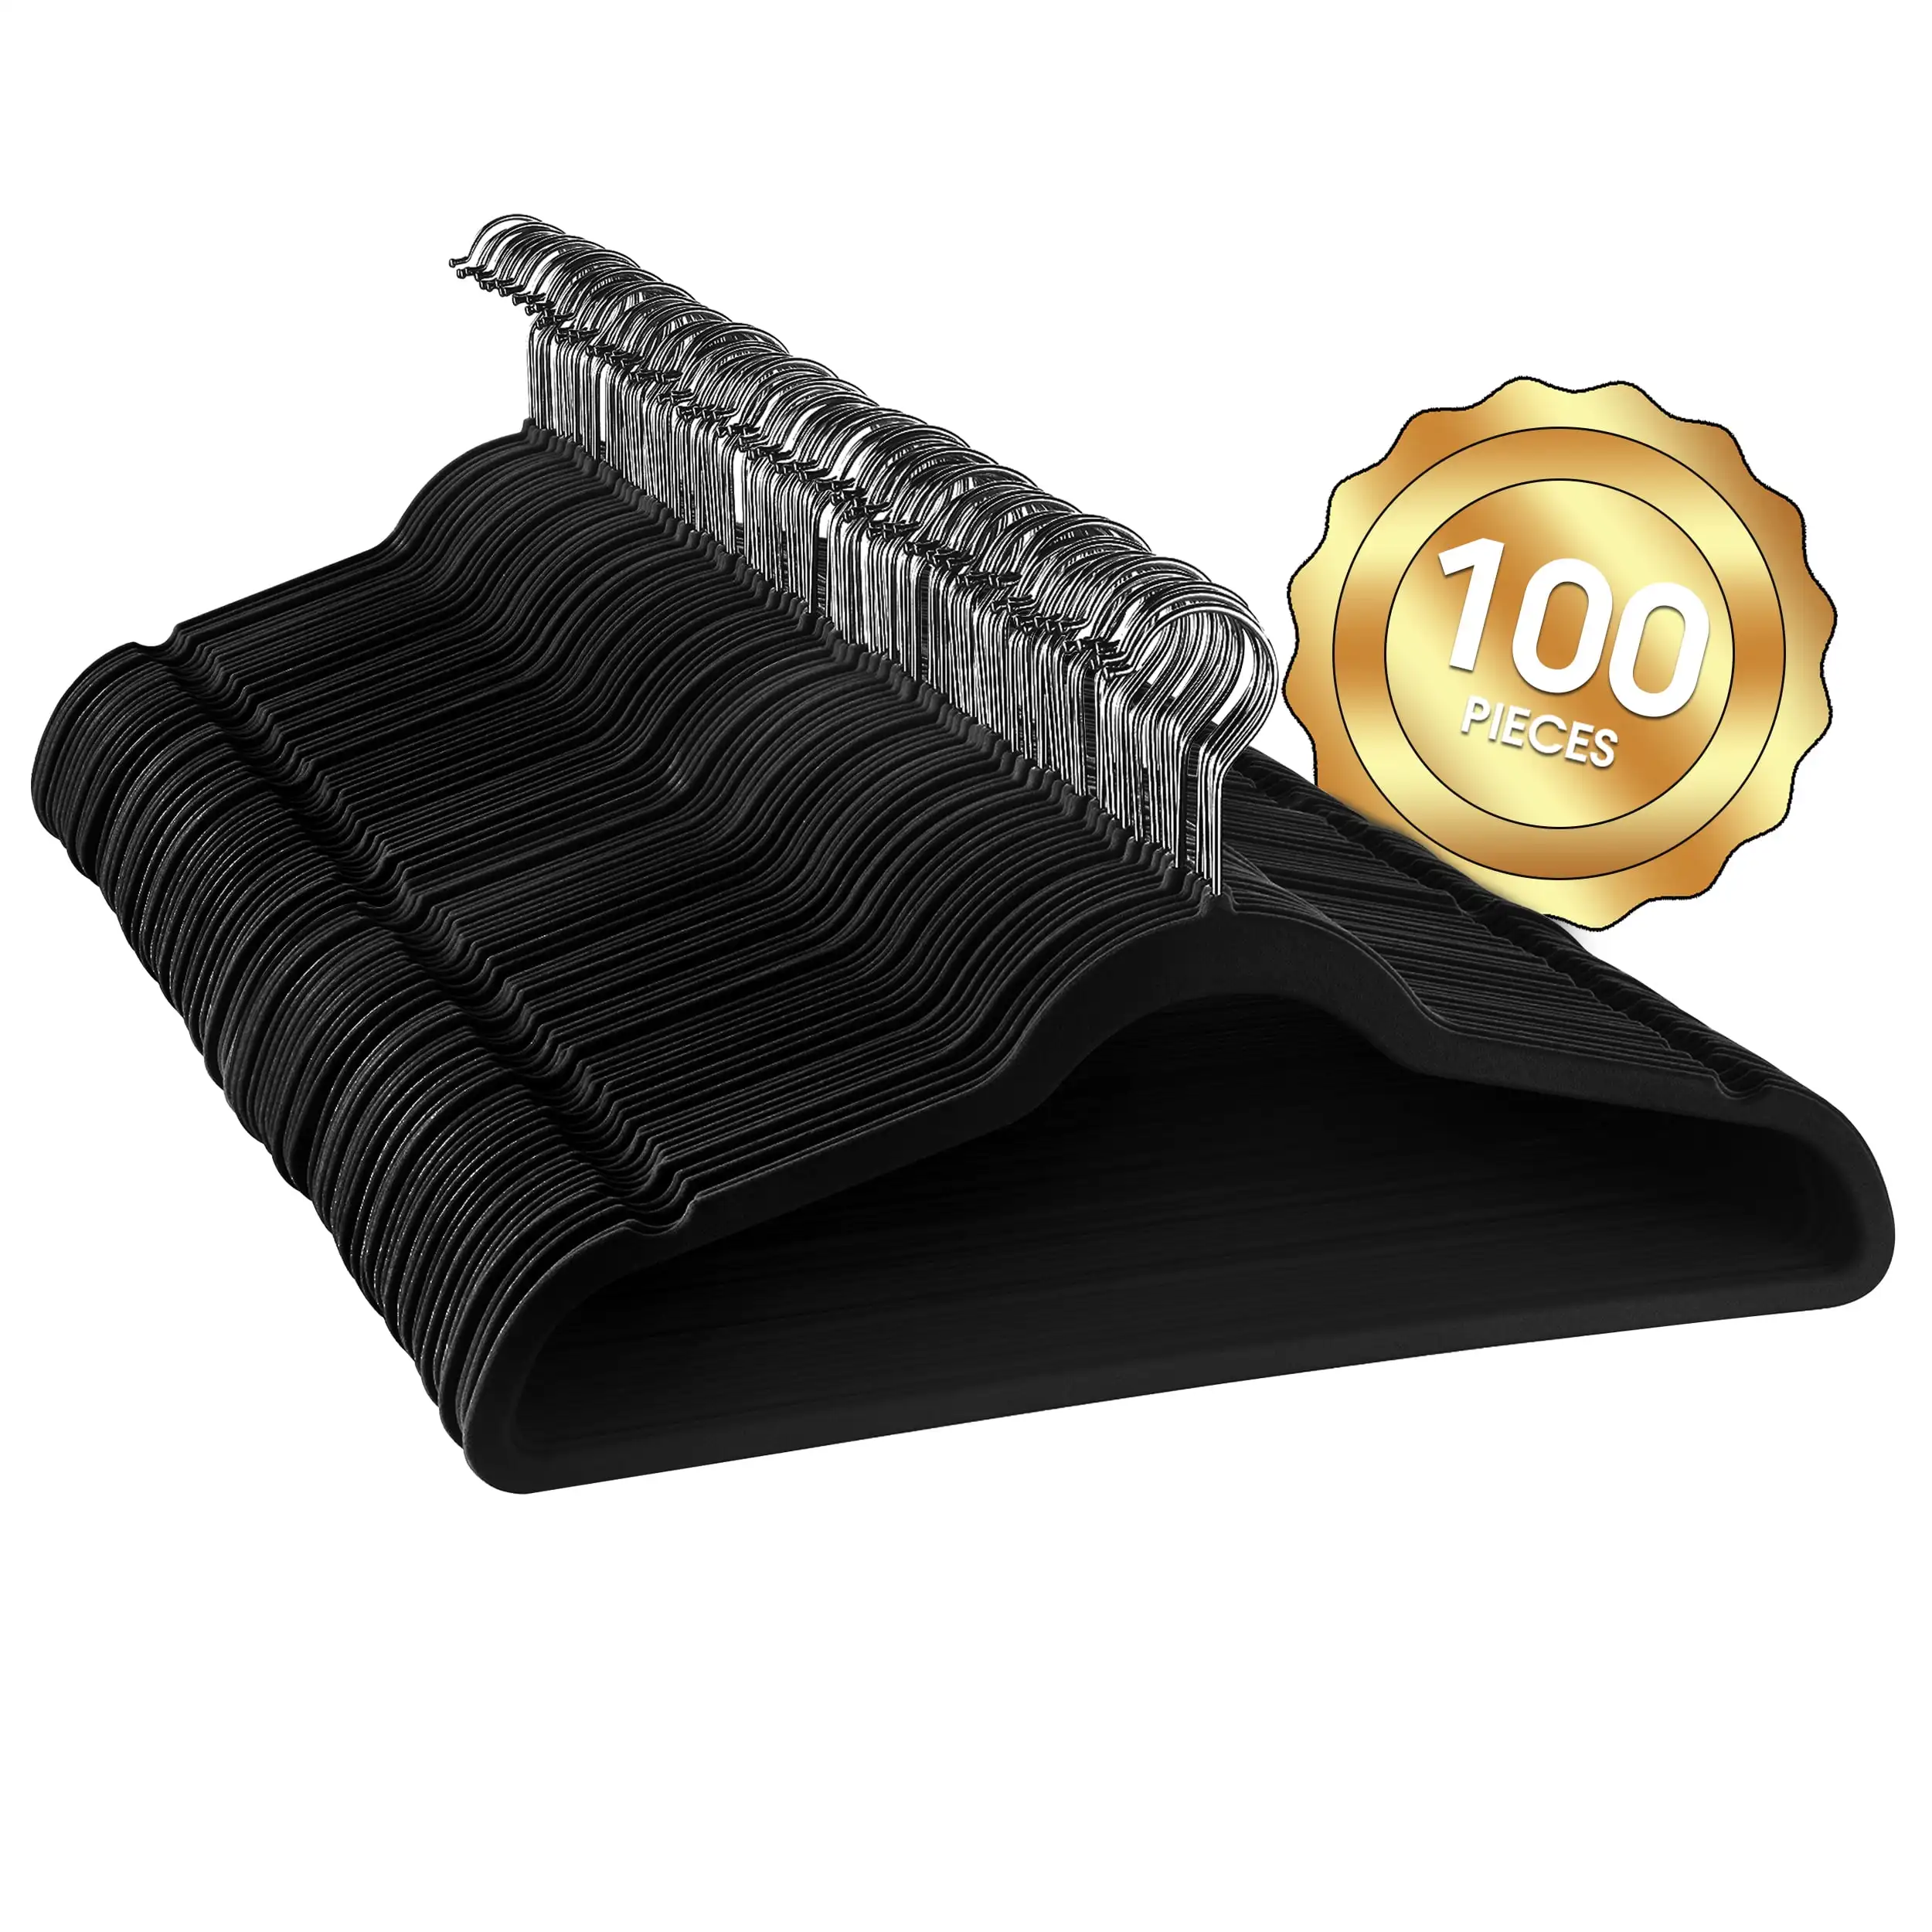 

100 Piece Set of Velvet Slim Profile Heavy Duty Felt Hangers with Stainless Steel Swivel Hooks in Black